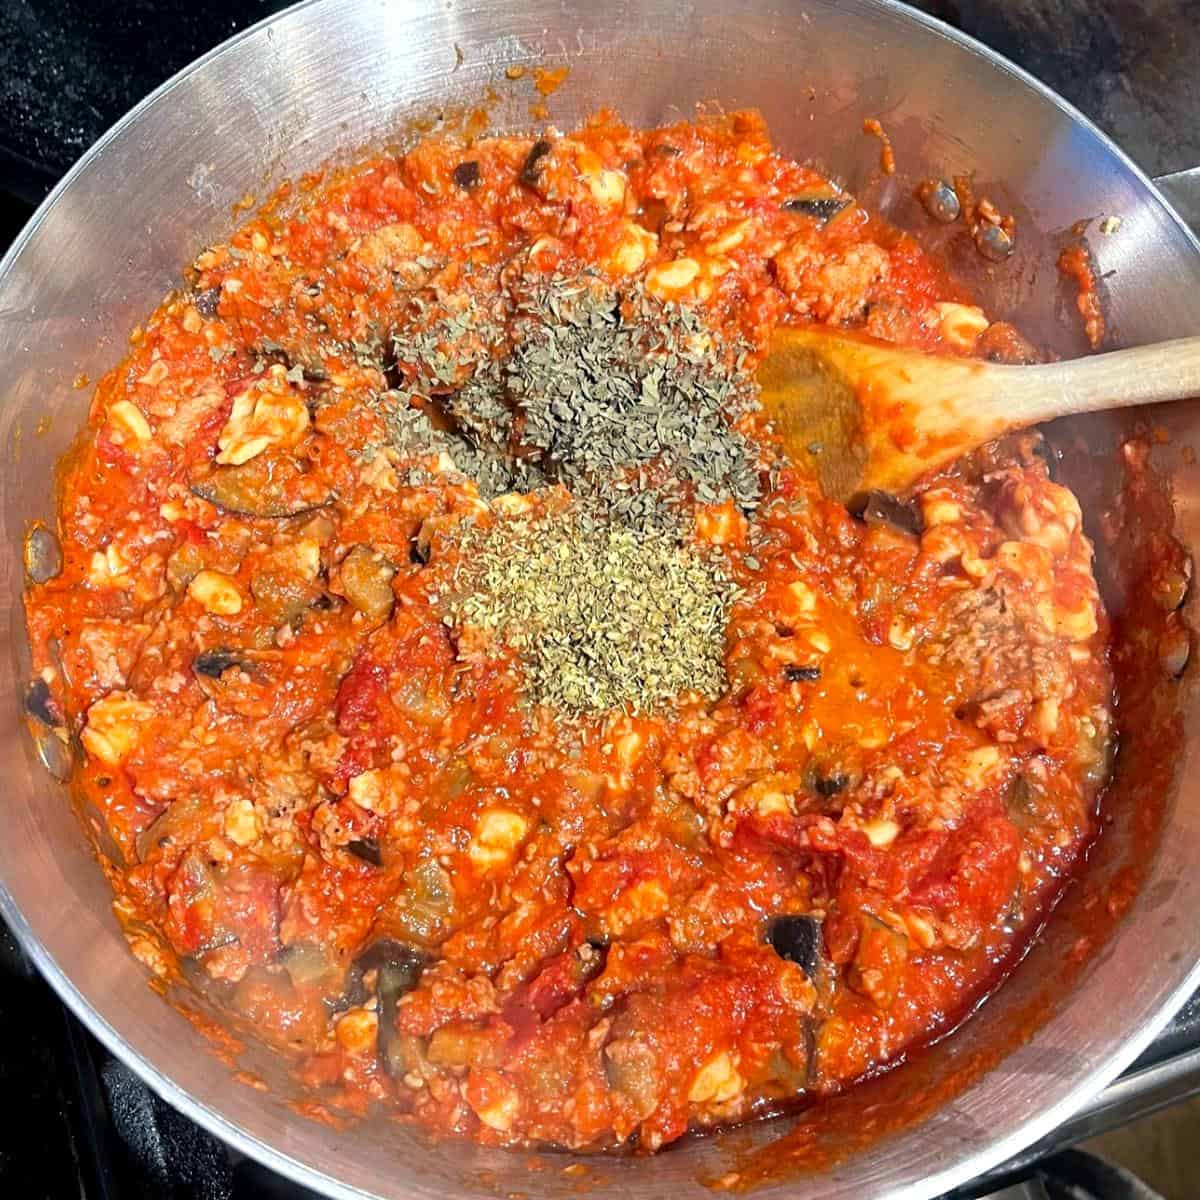 Basil and oregano added to marinara sauce.